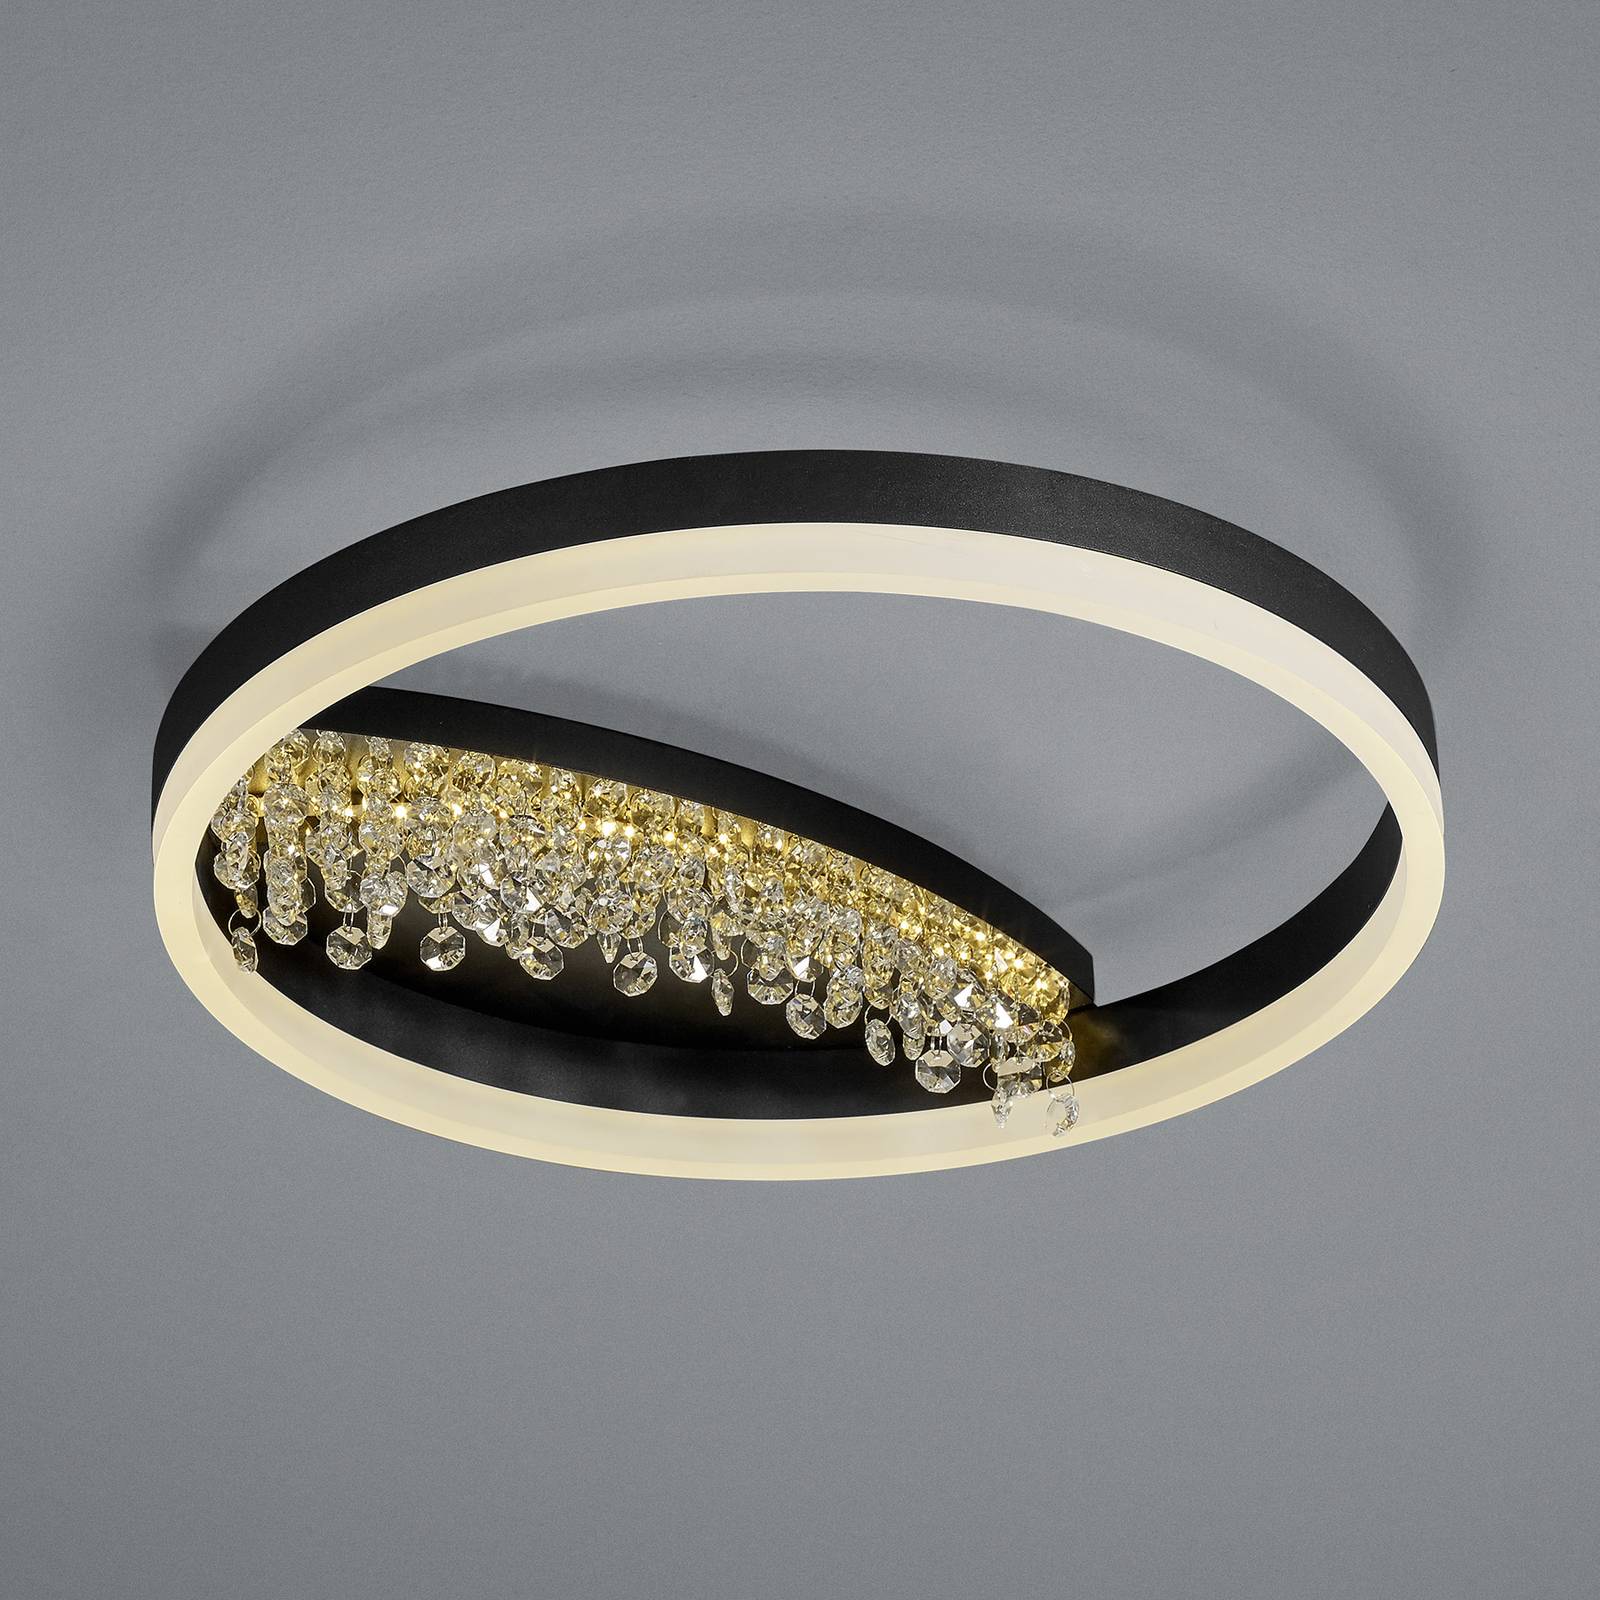 Image of HELL Plafonnier LED Dana avec décor cristal, noir 4045542228181